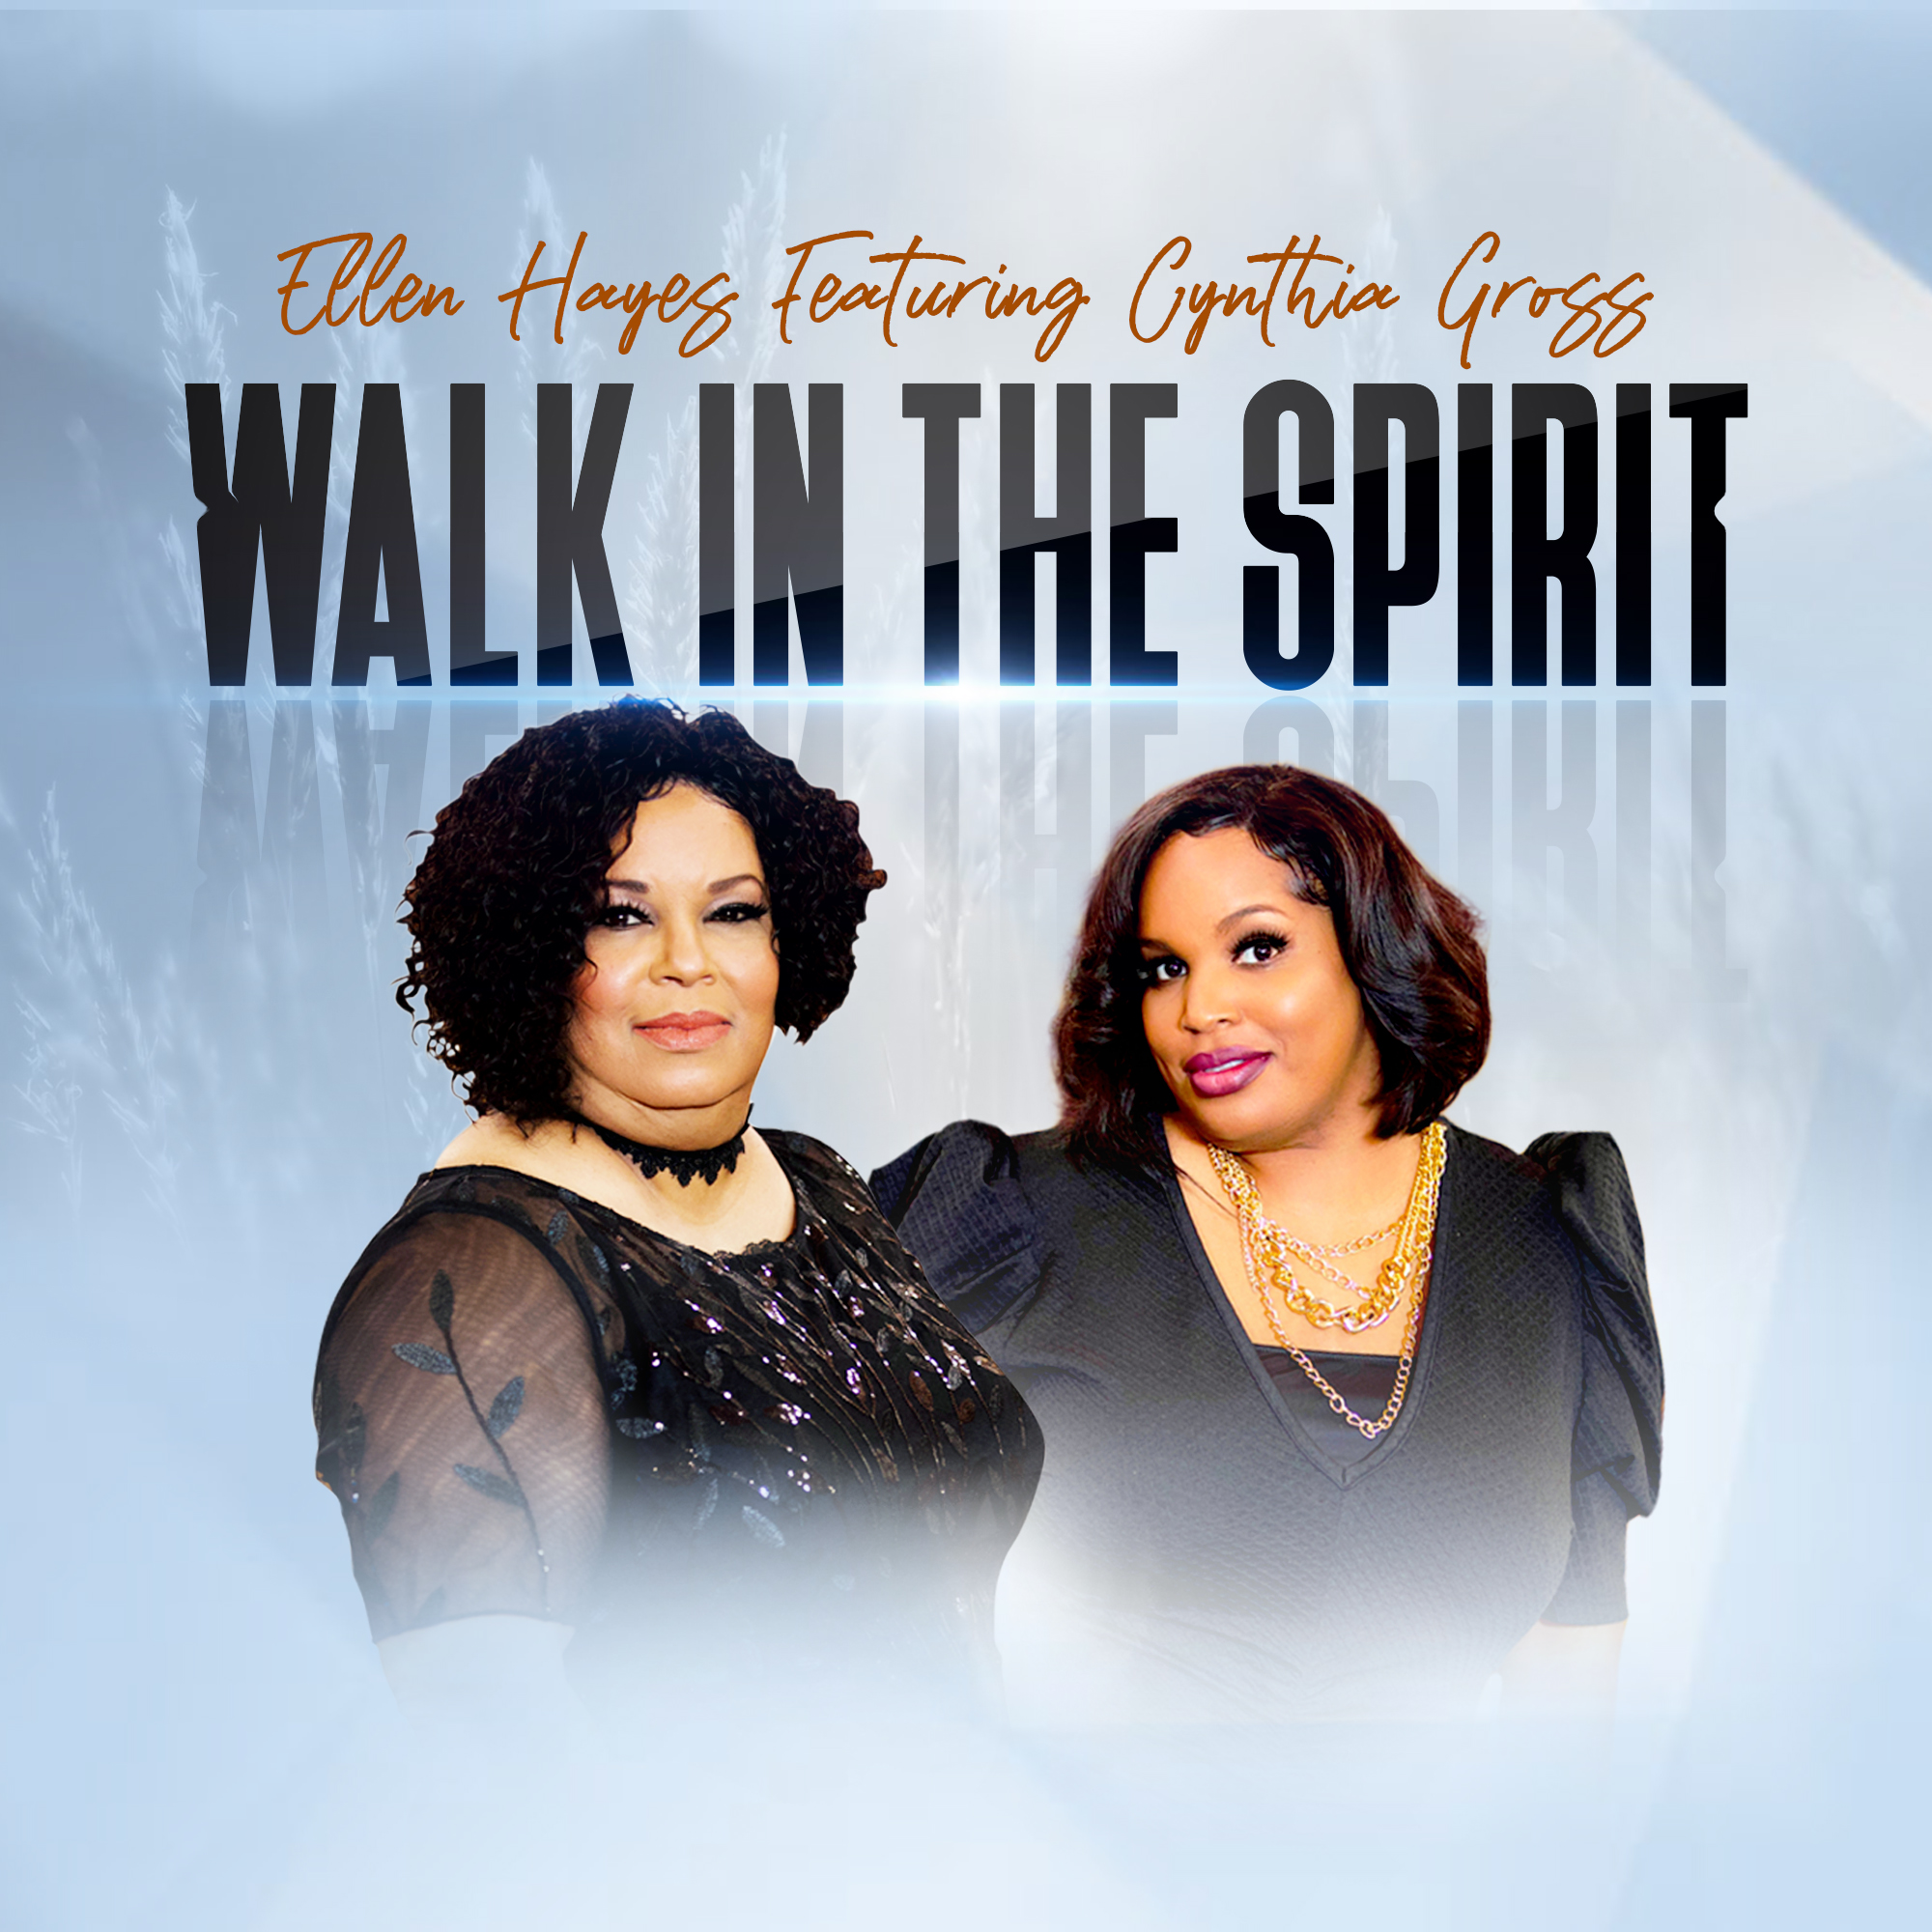 Ellen Hayes Featuring Cynthia Gross - Walk In The Spirit